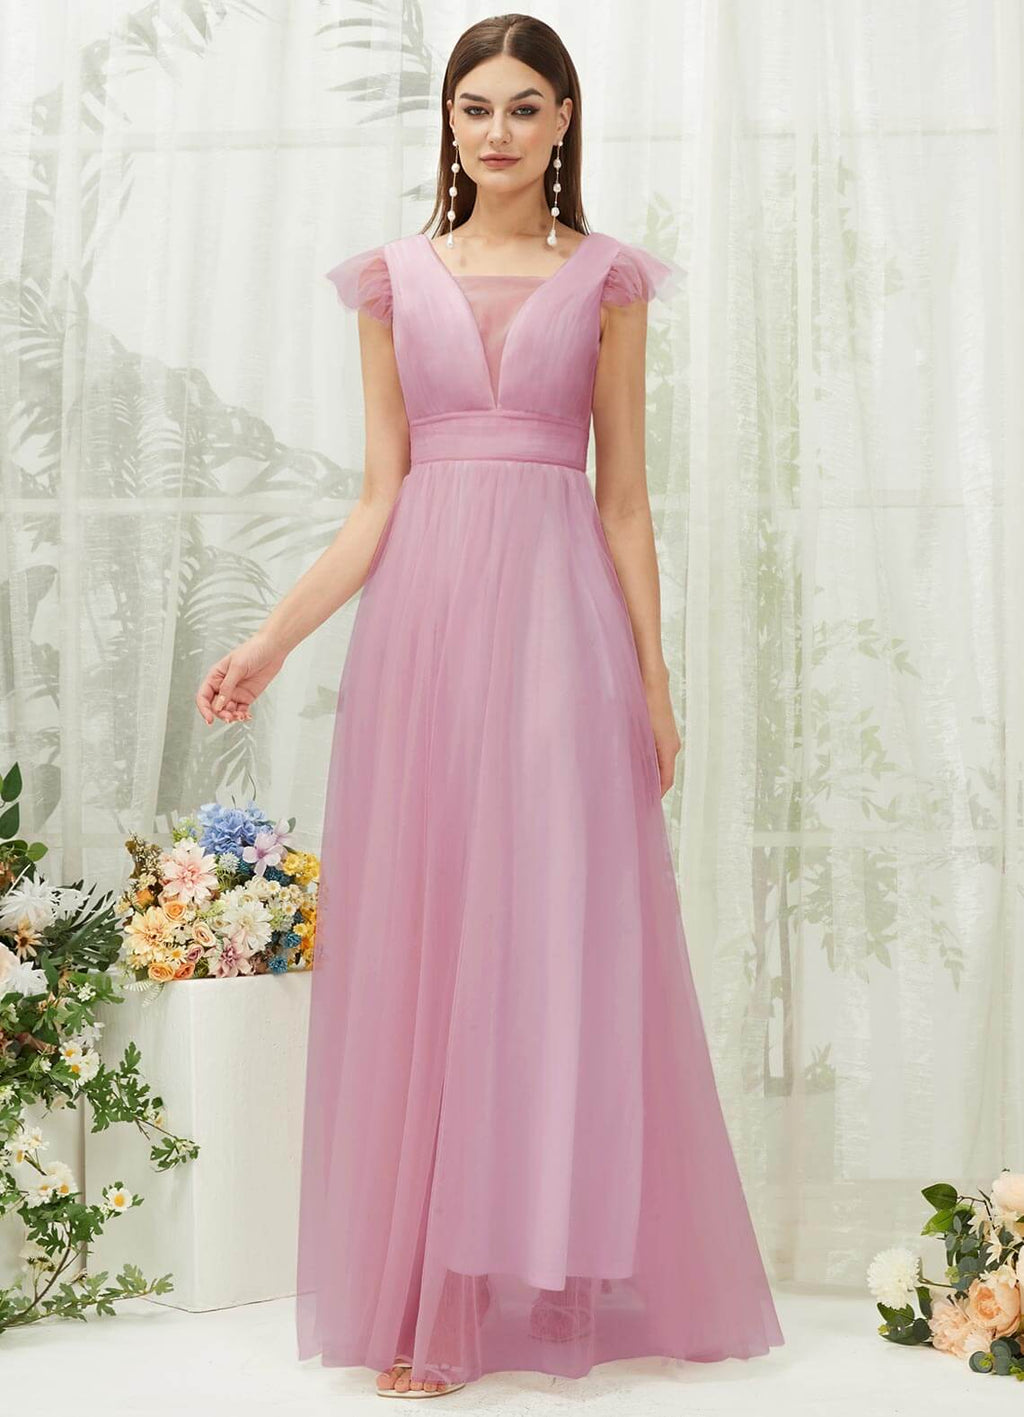 NZ Bridal Mauve CapSleeves Tulle Floor Length bridesmaid dresses R0410 Collins a